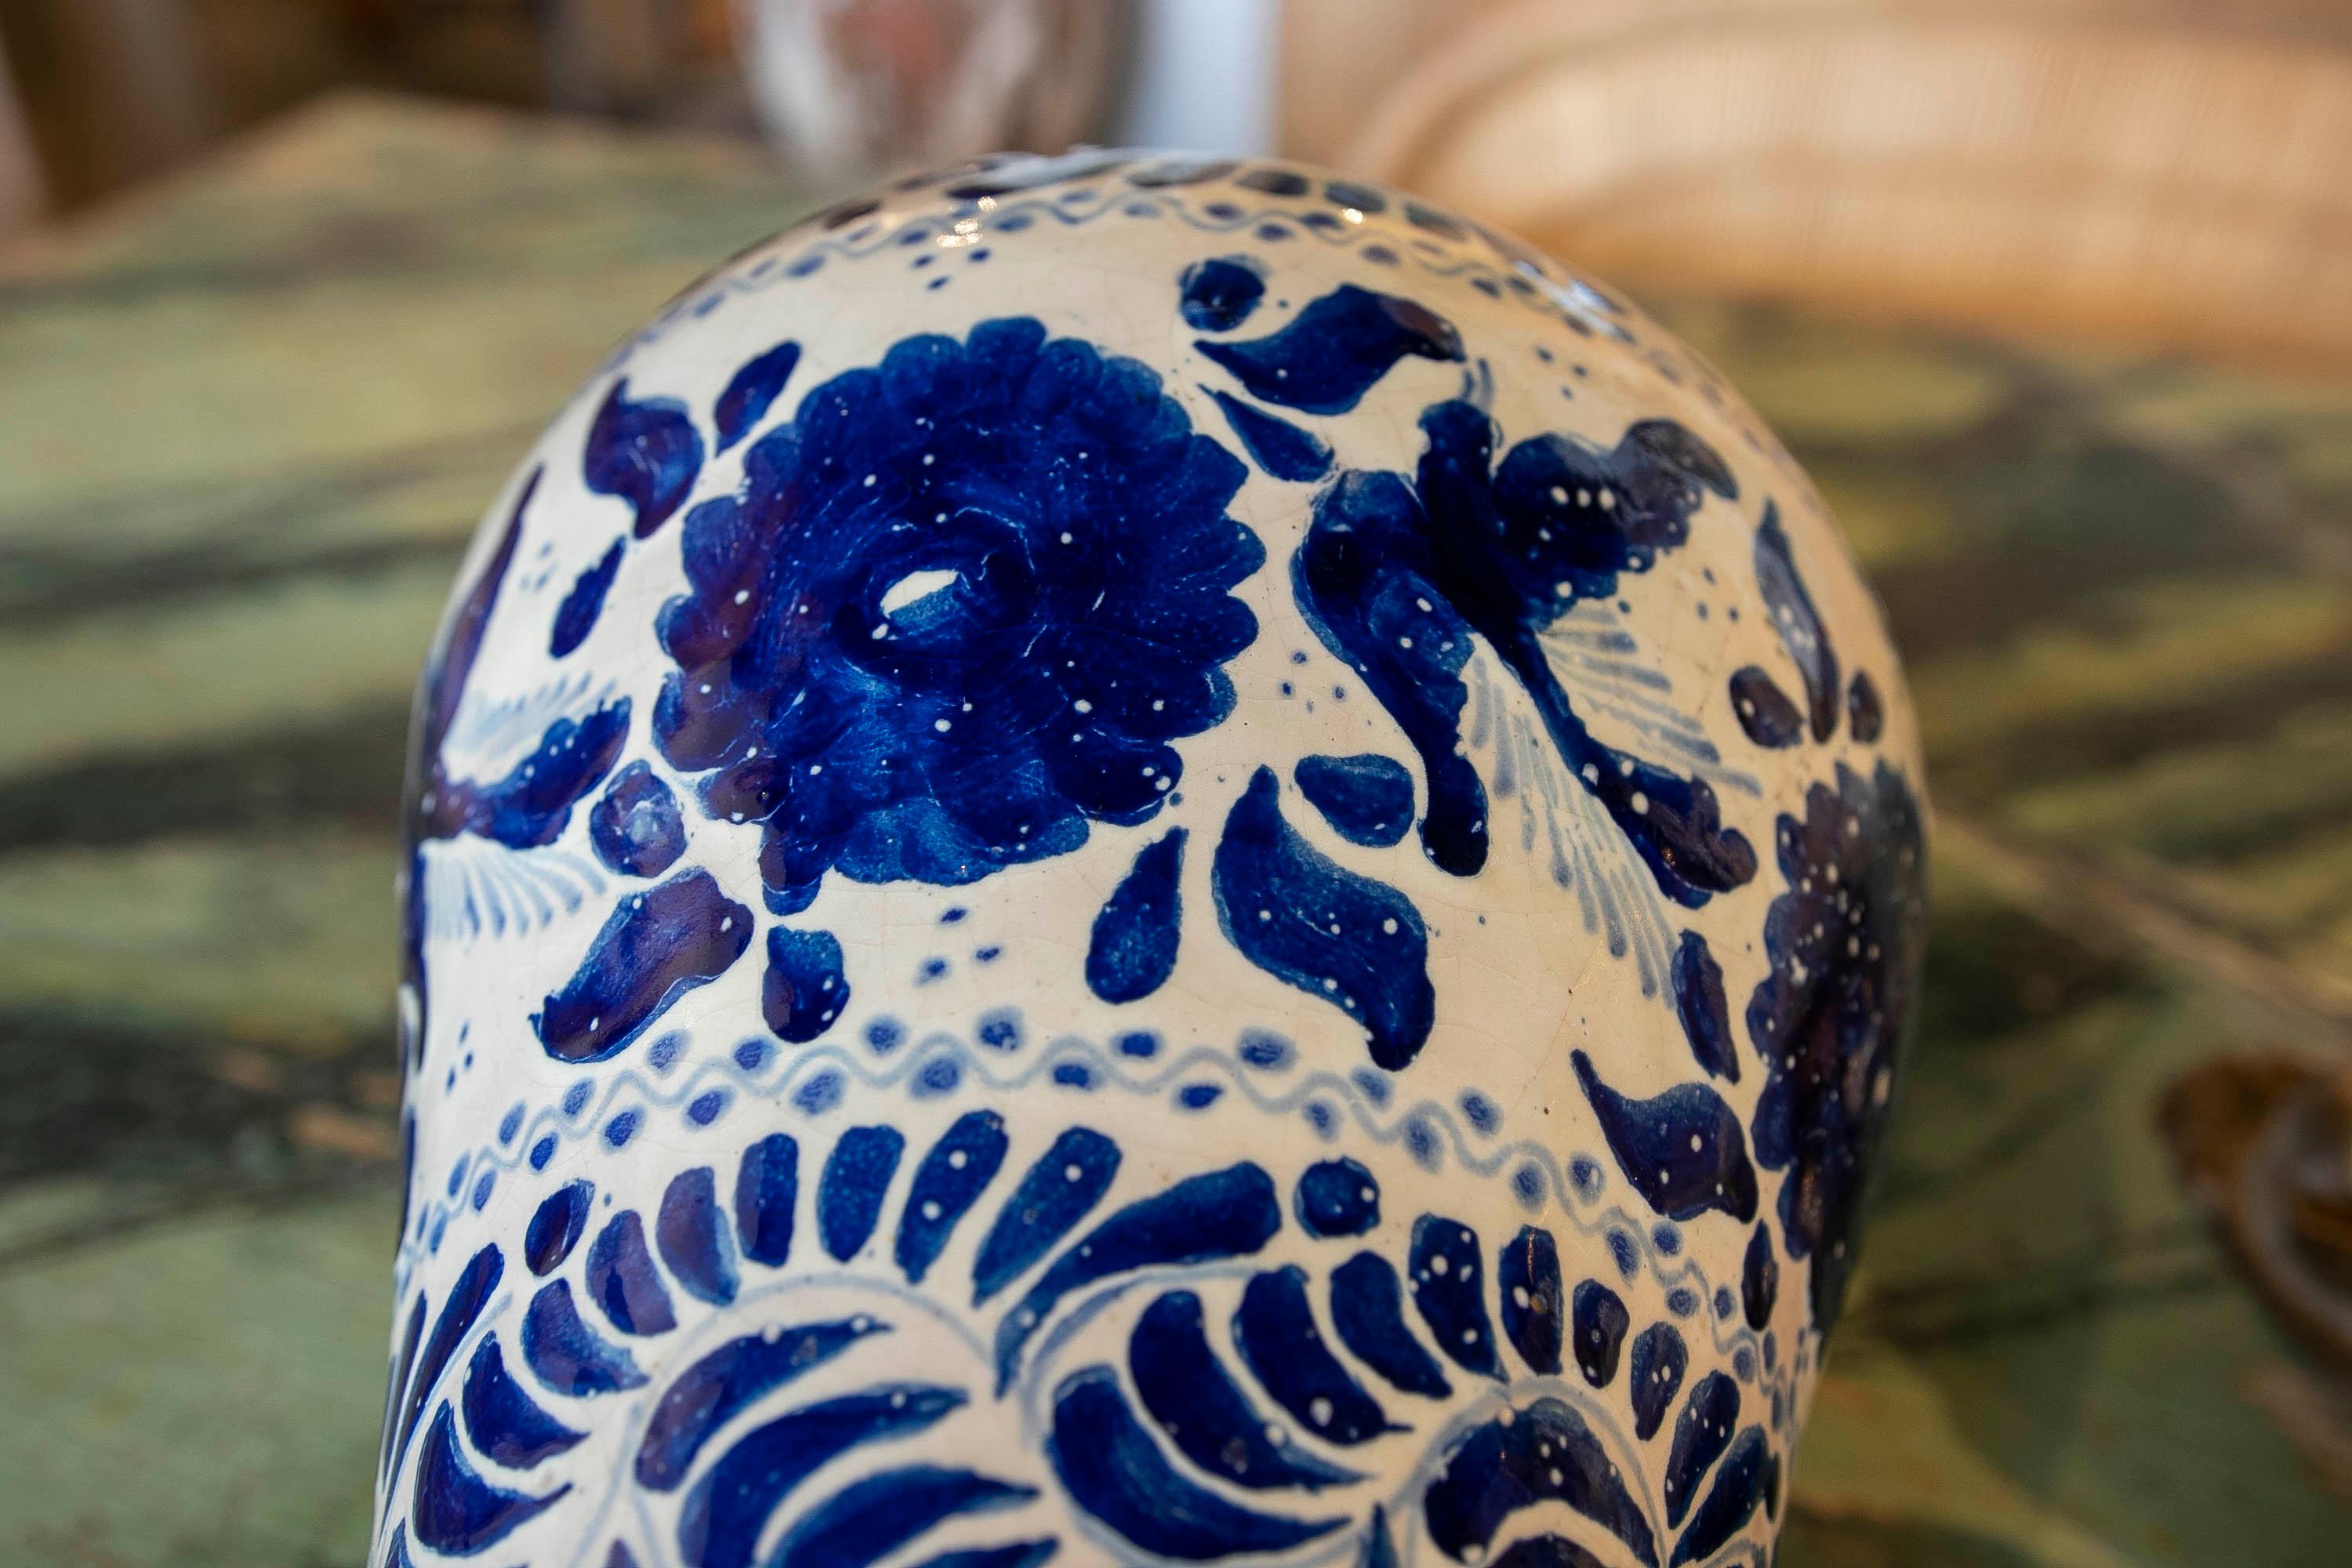 1970s Mexican Glazed Ceramic Vase in Blue Tones from Puebla.